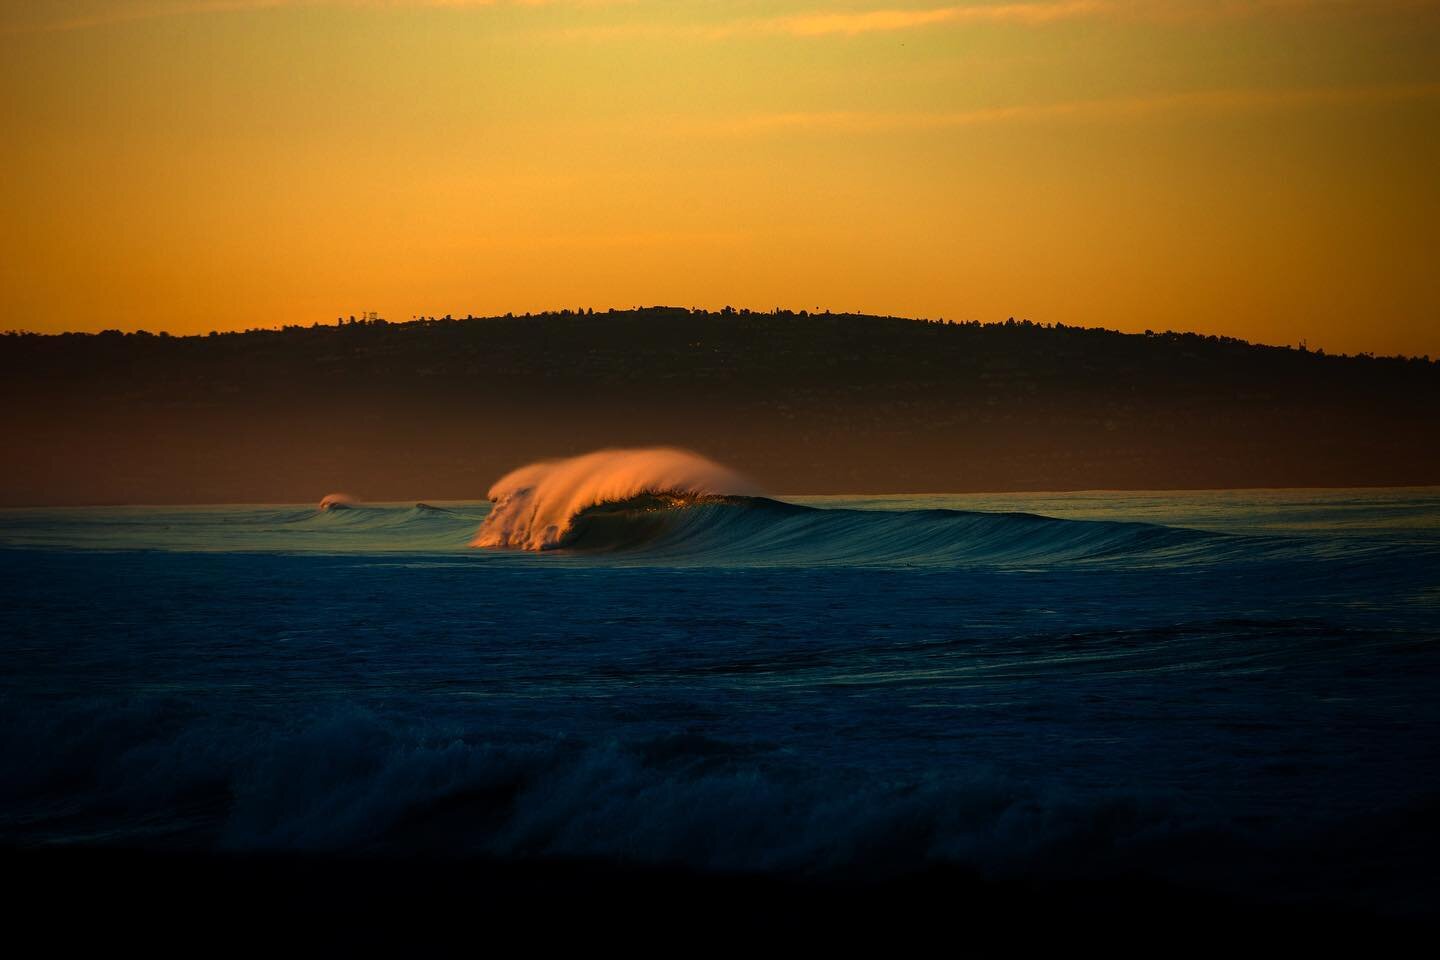 Sunrise hues
&bull;
&bull;
&bull;
#dawn #california #southbay #firstlight #dawnpatrol #sunrise #swell #surf #ocean #waves #emptywaves #surfculture #nvsurf #waterphotographer #wavephotography #surfphotography #cinematographer #directorofphotography #d